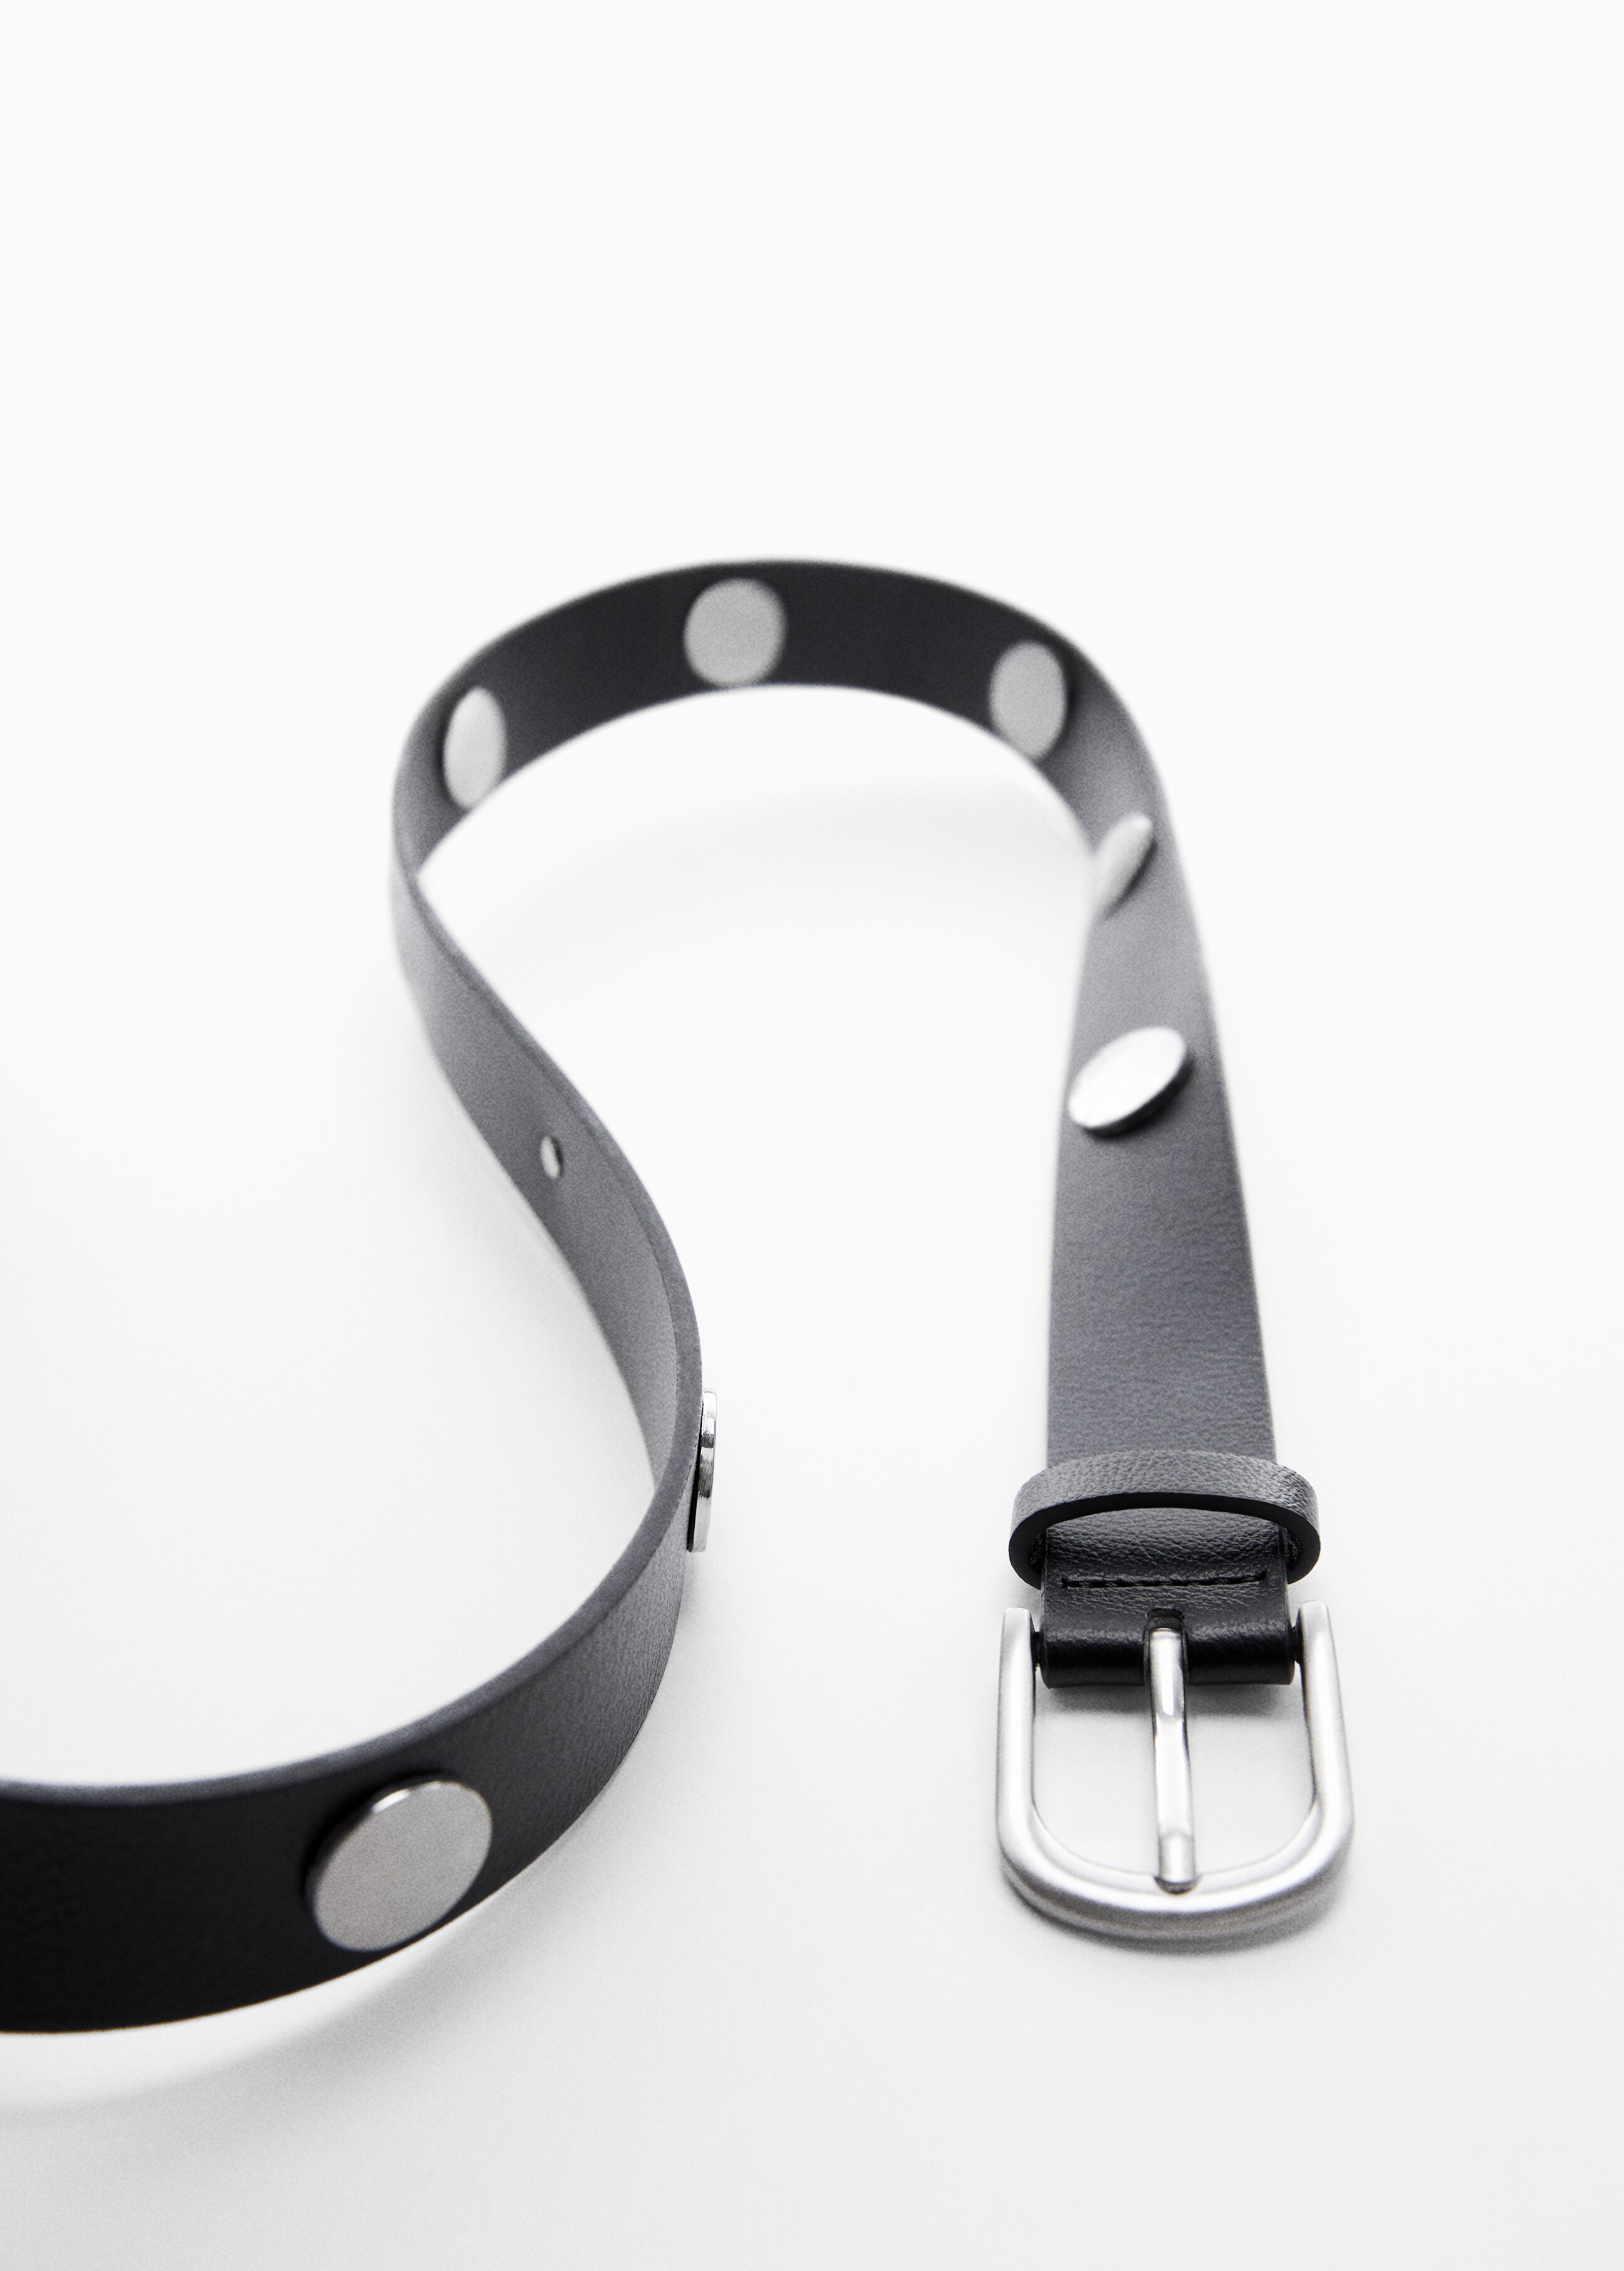 Metal appliqué belt - Details of the article 5